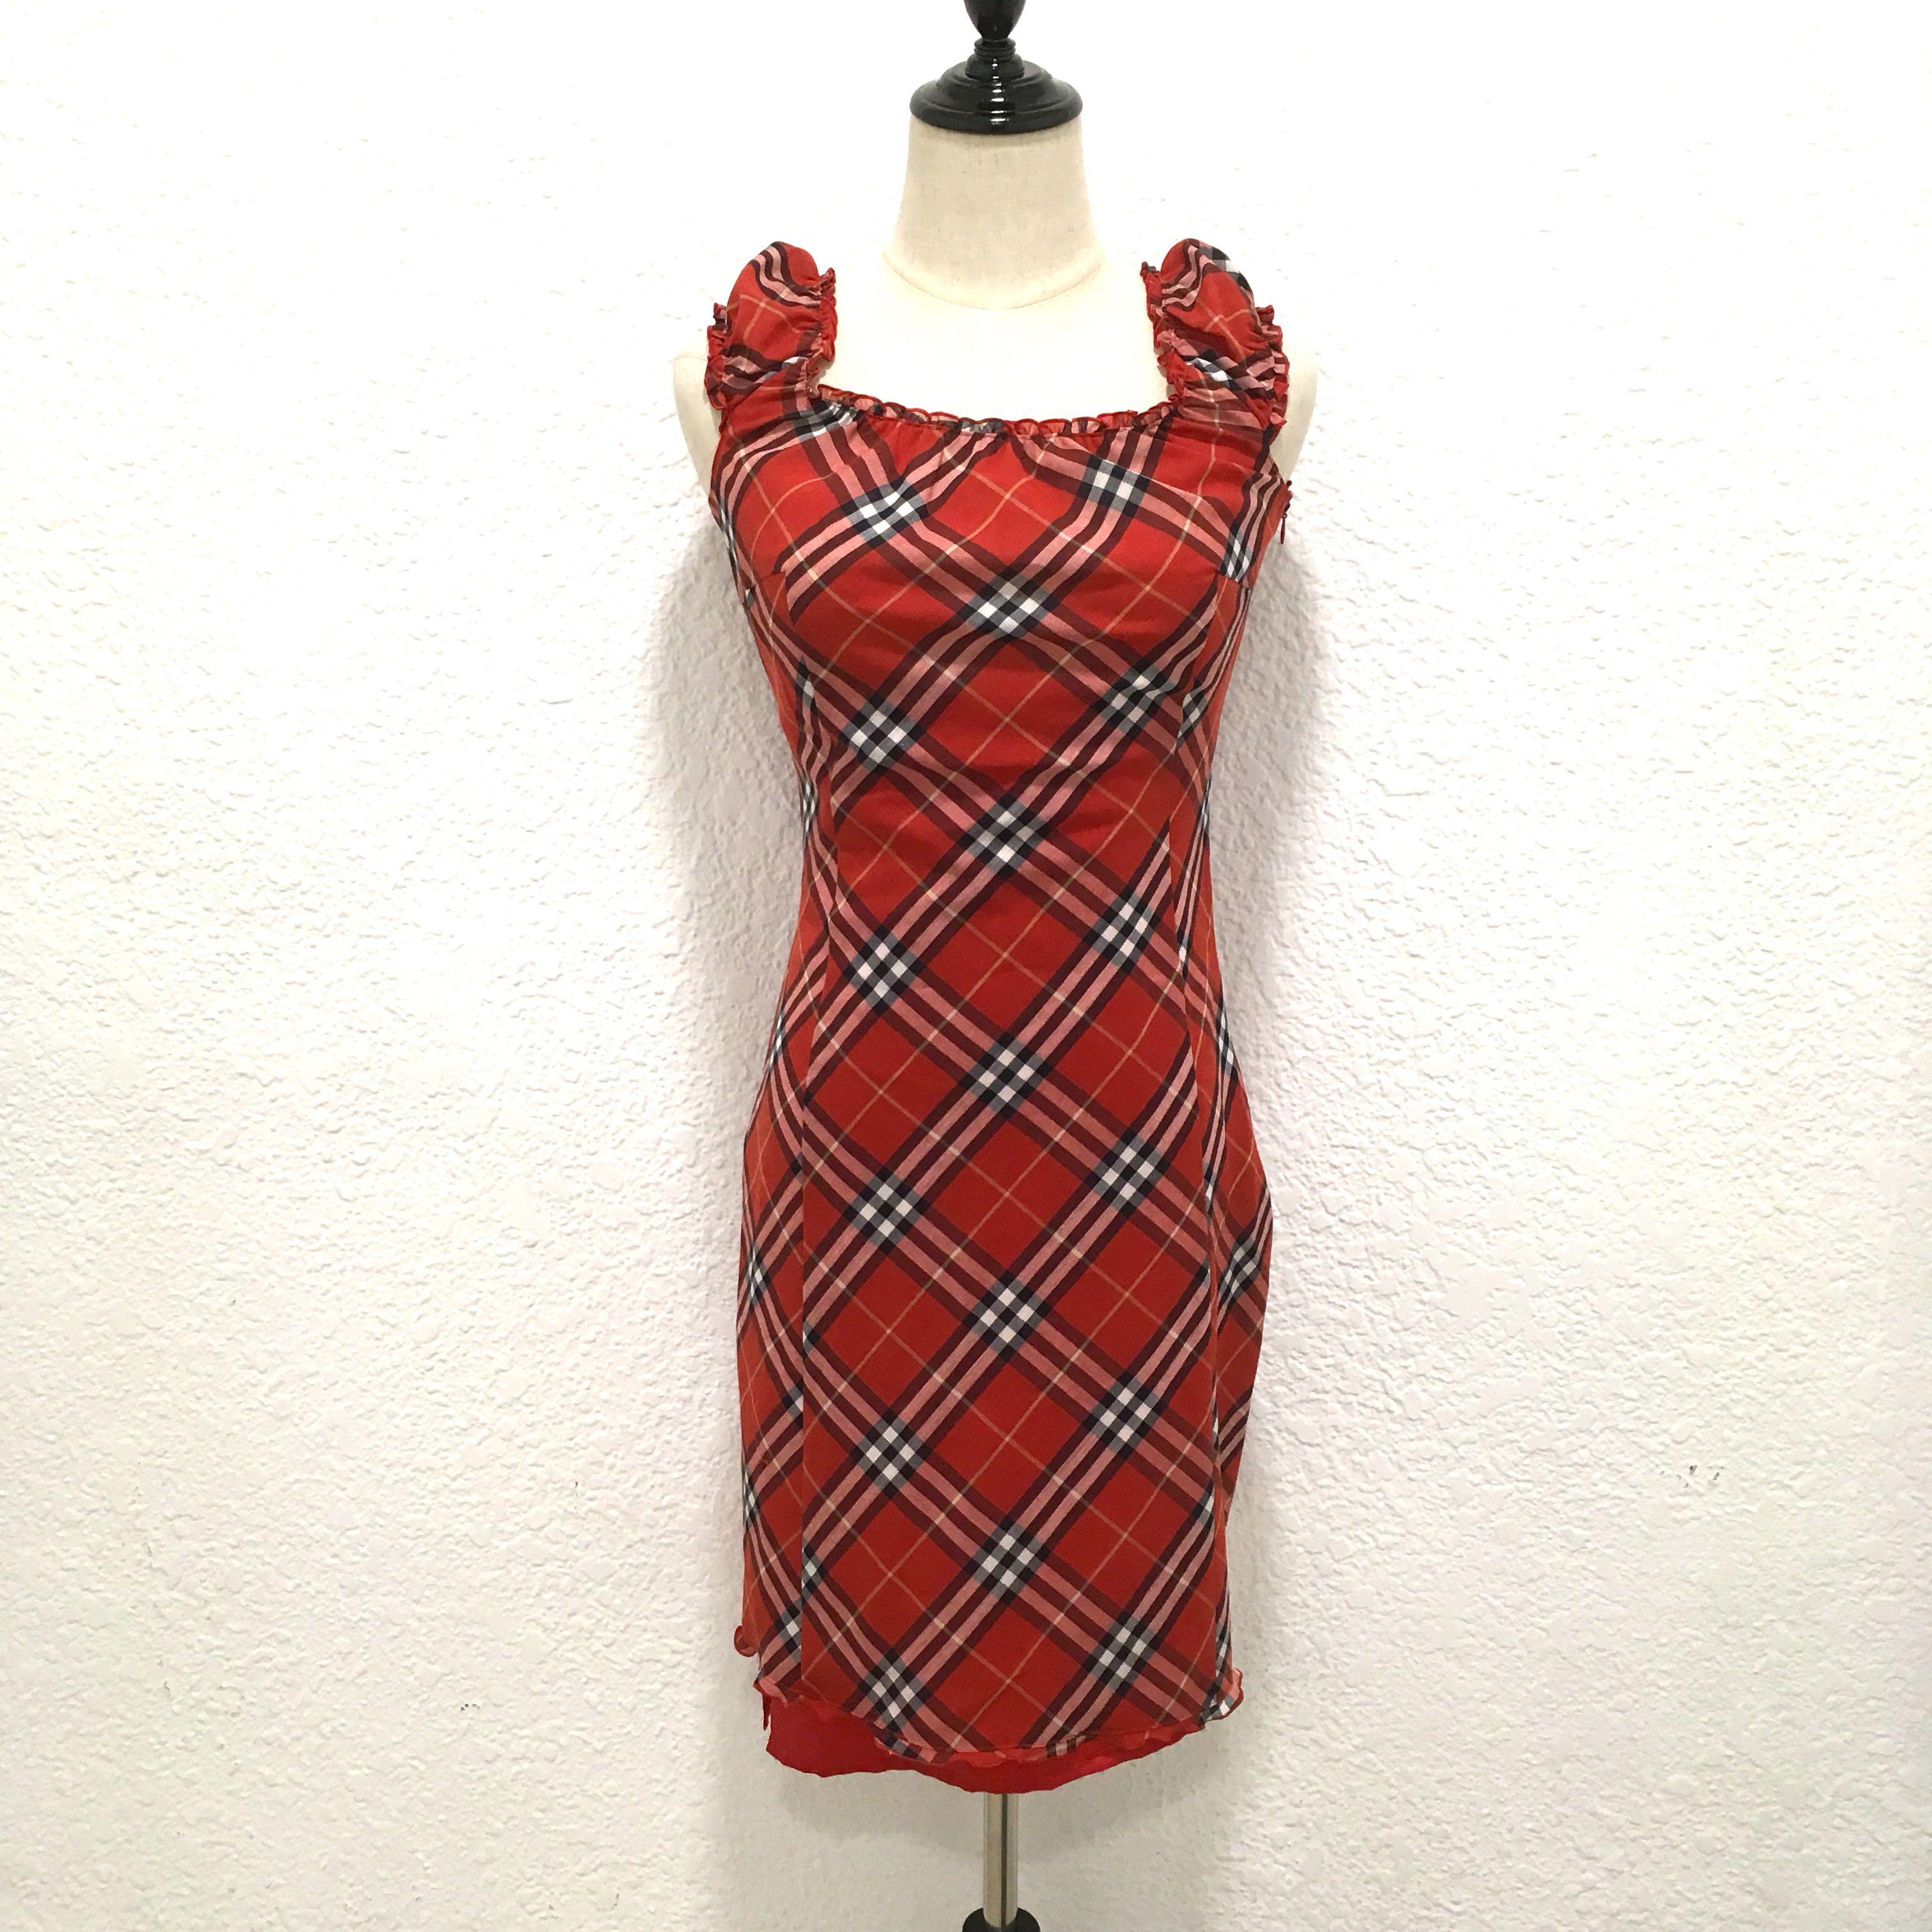 burberry red dress